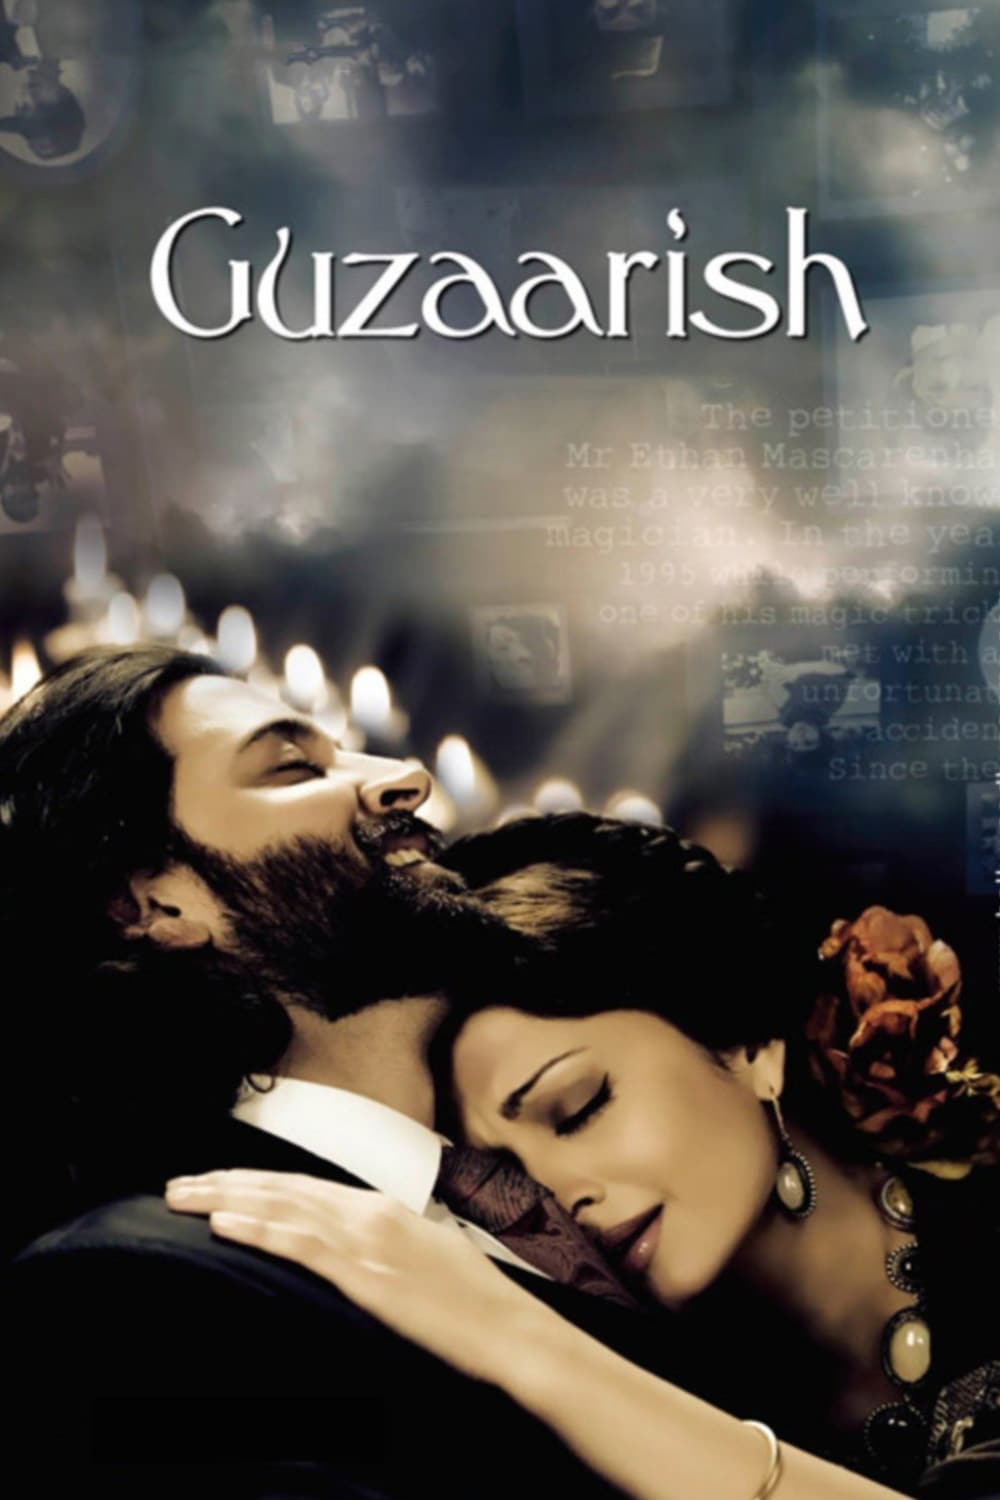 Poster for the movie "Guzaarish"